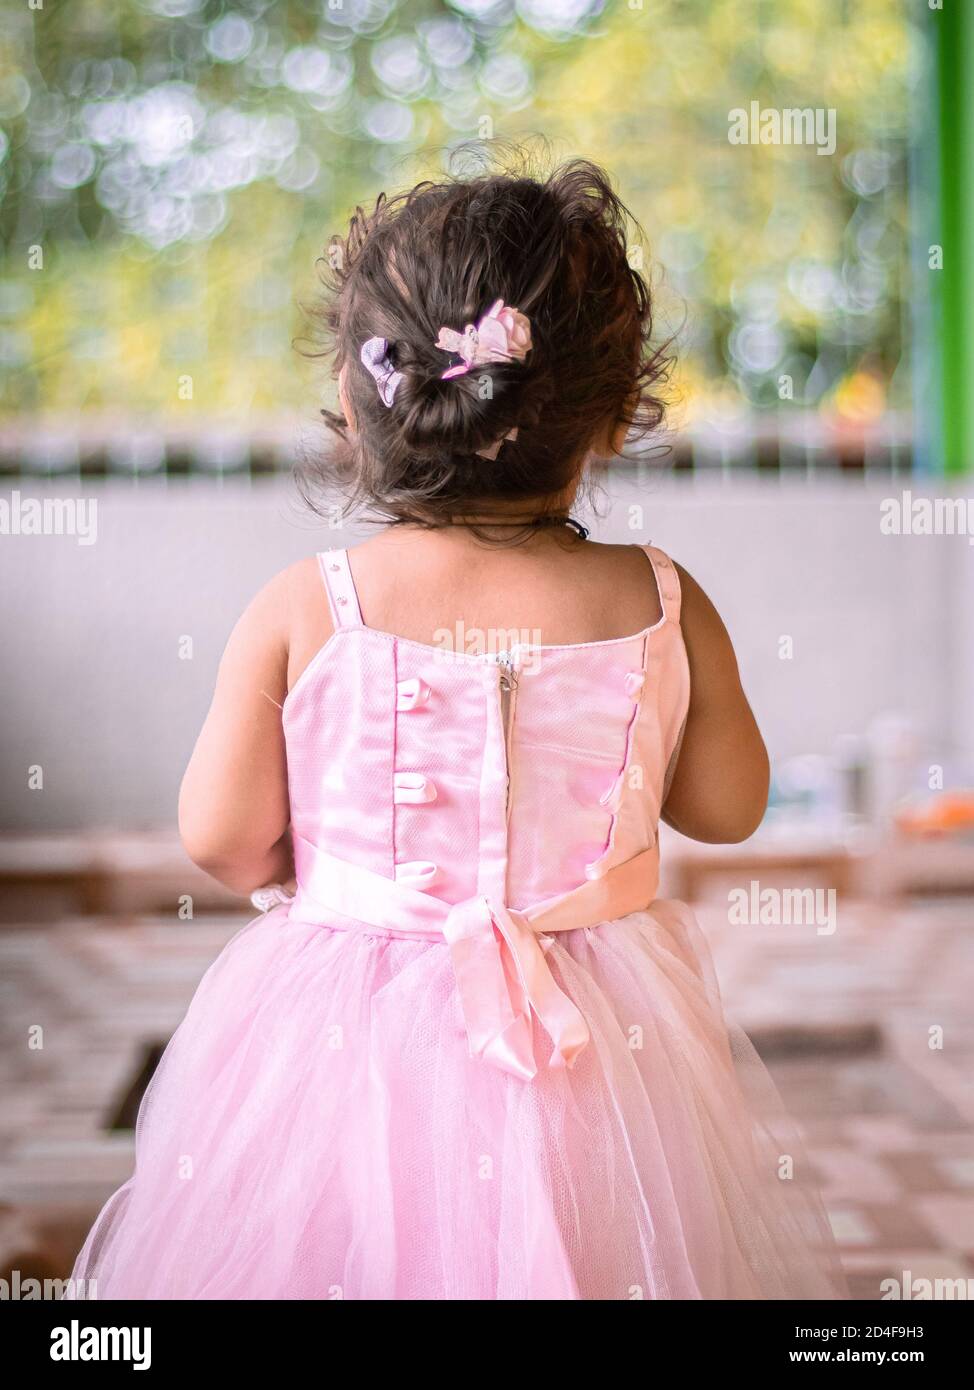 Cute Girl wearing pink fairytale dress stock image. Stock Photo